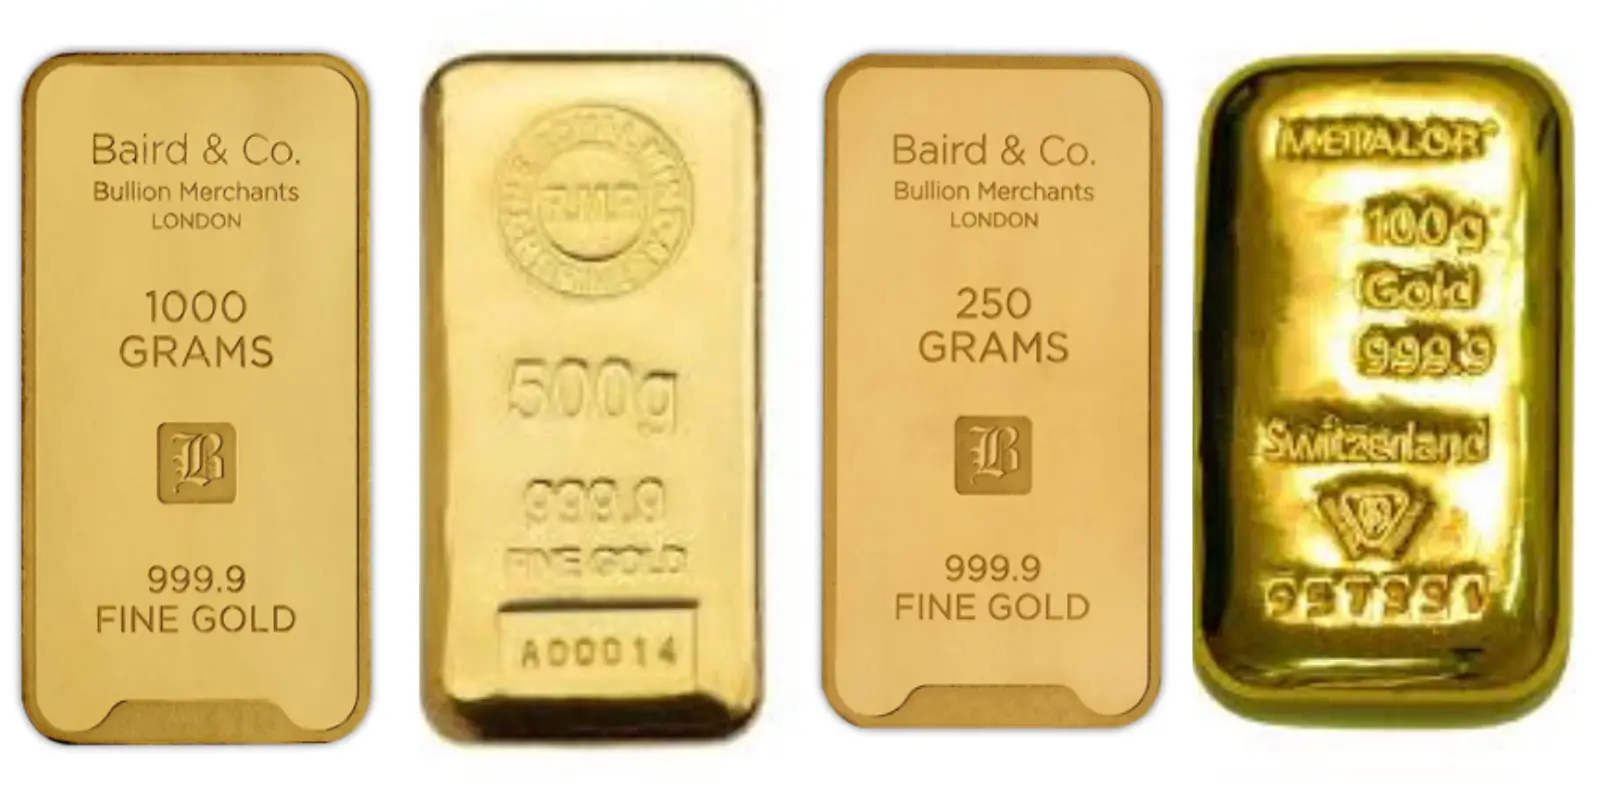 Should I Buy Gold Bars Online? What Should I Look For?